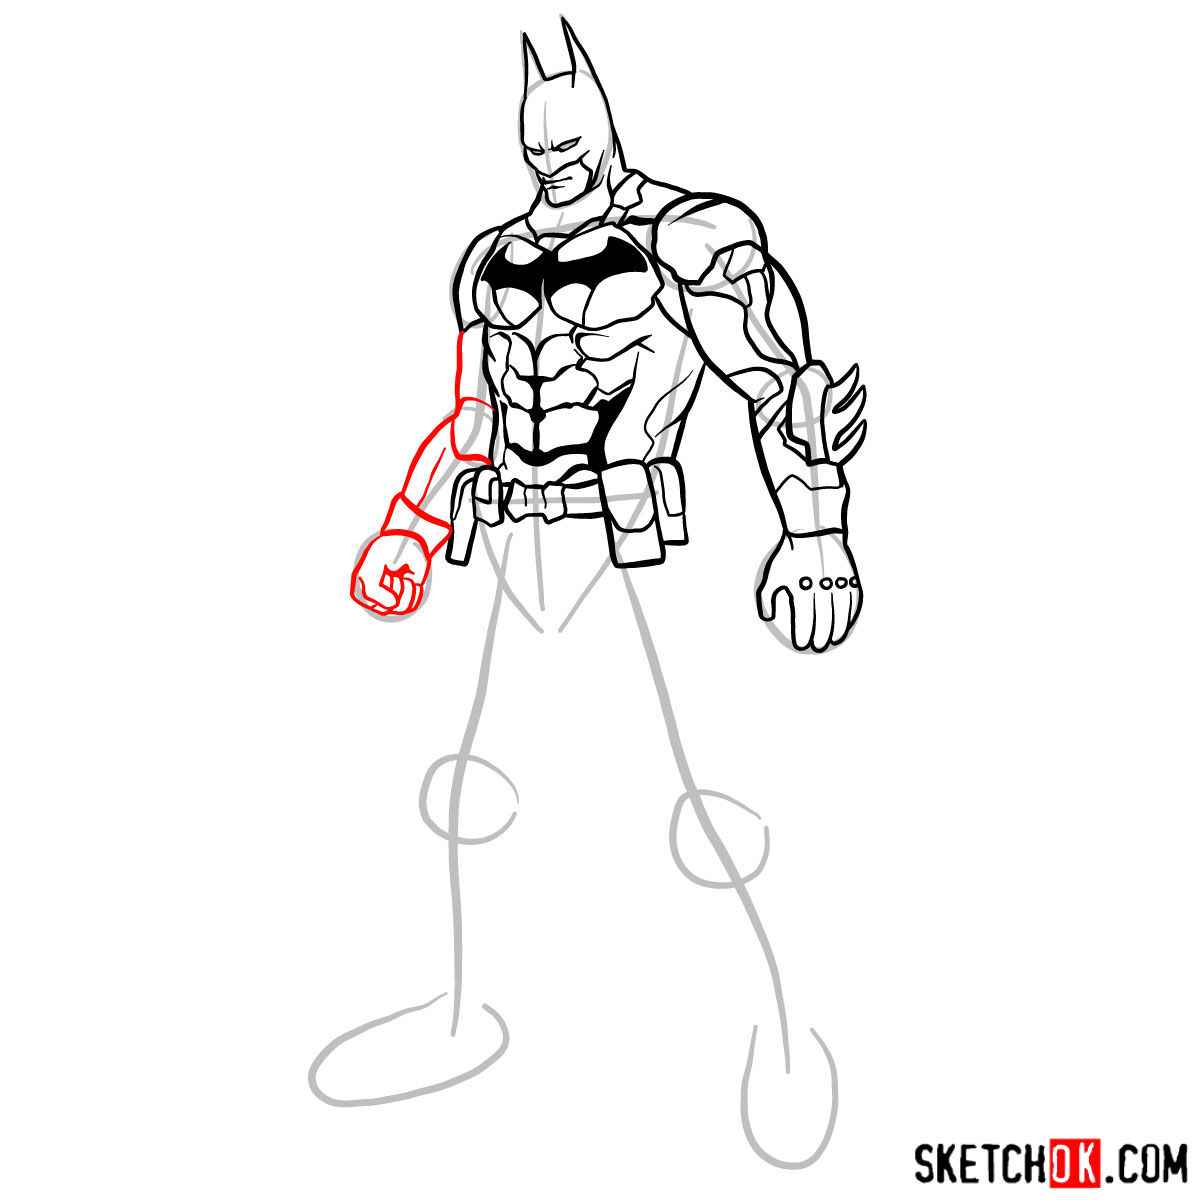 How to draw Batman the Dark Knight - step 11